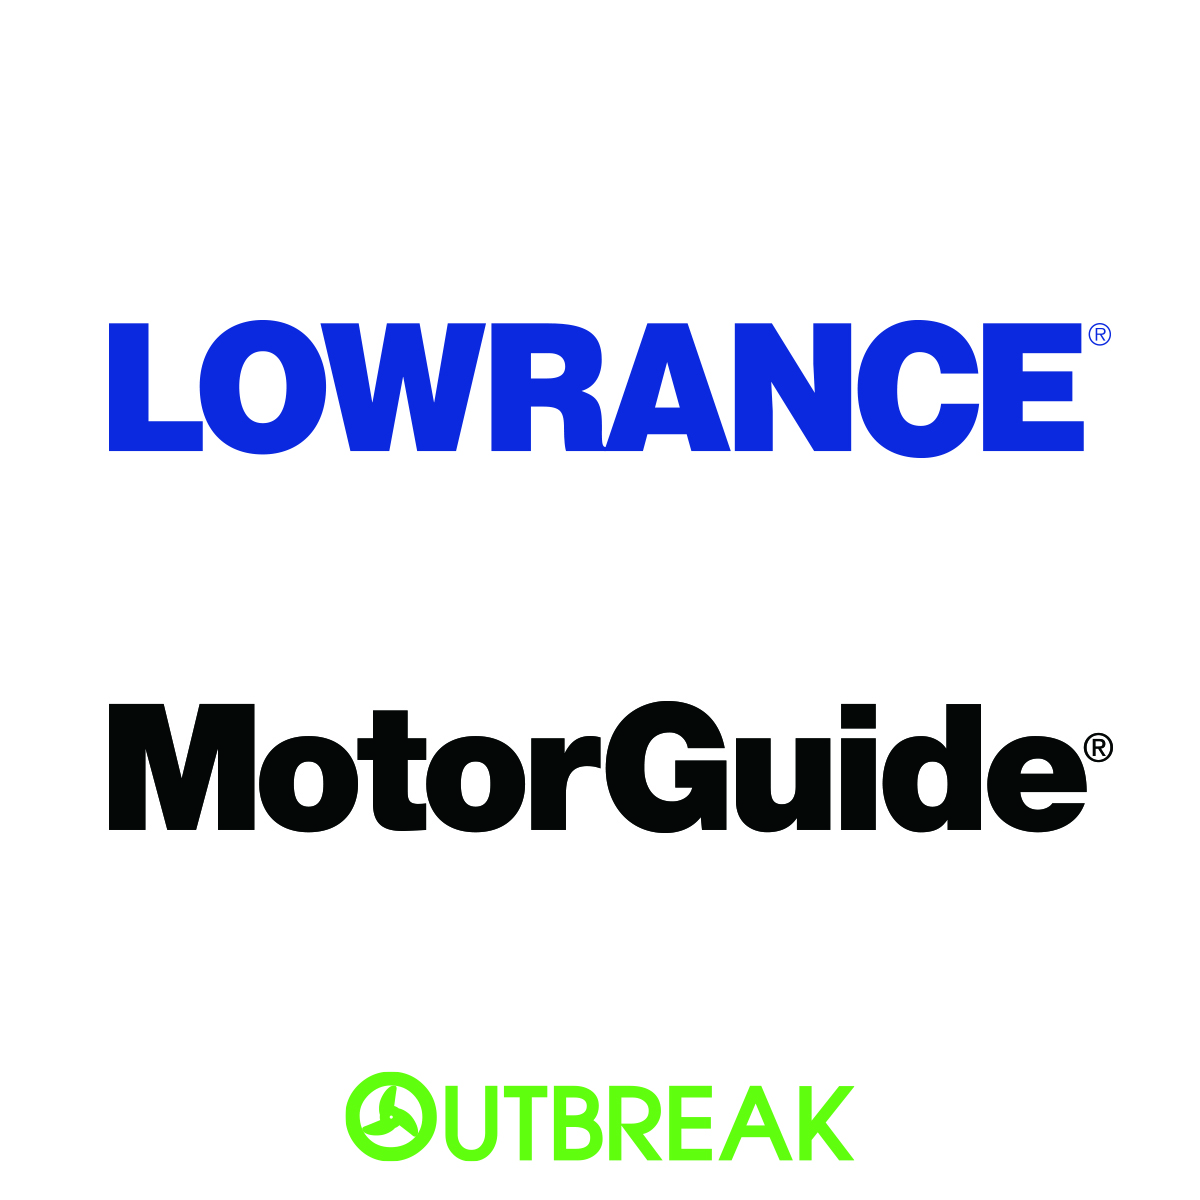 LOWRANCE / MotorGuide / OUTBREAK株式会社